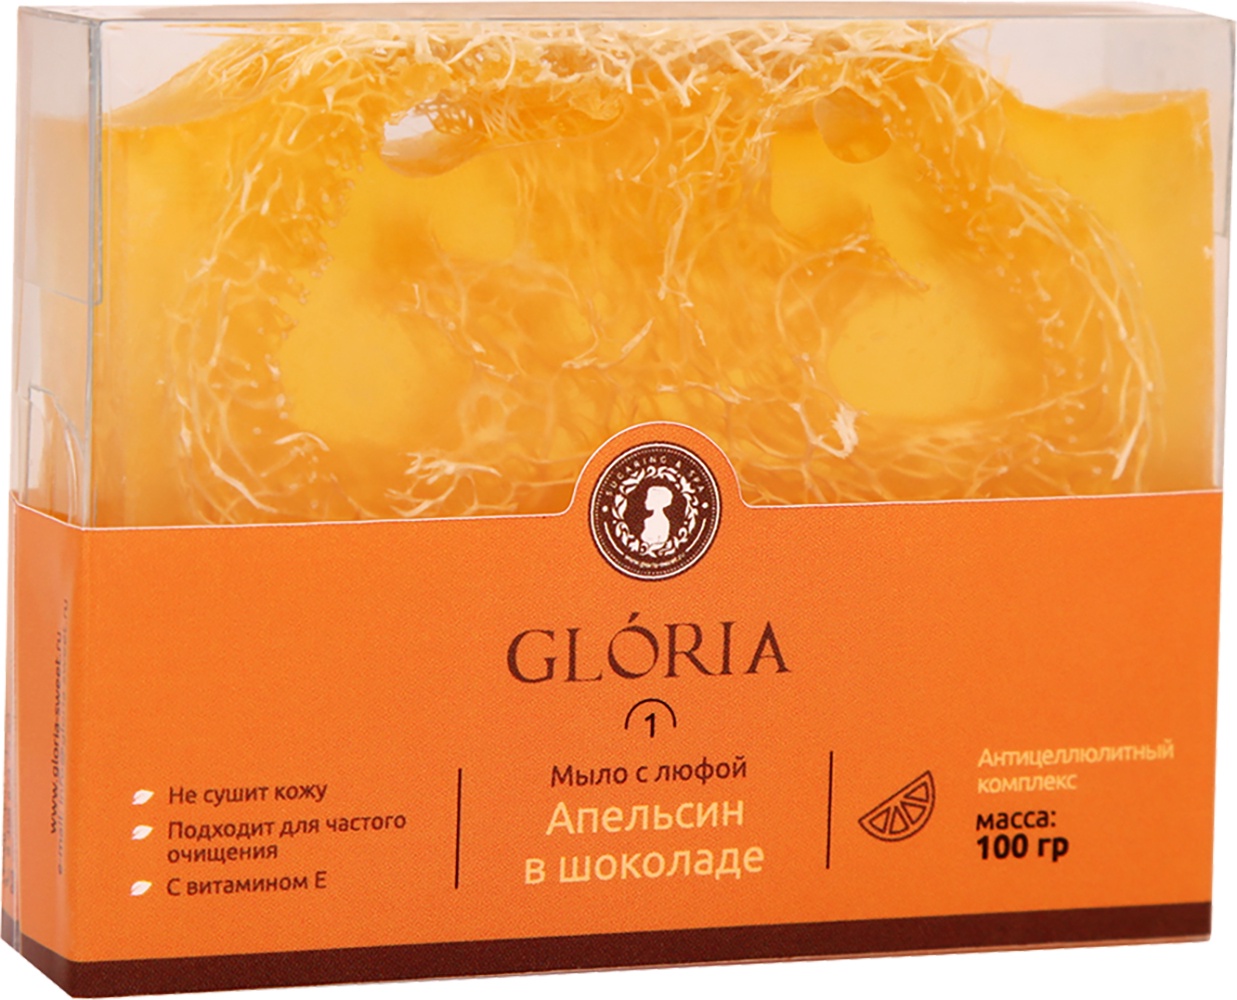 фото Мыло с люфой GLORIA "Апельсин в шоколаде" 100 г Gloria home spa